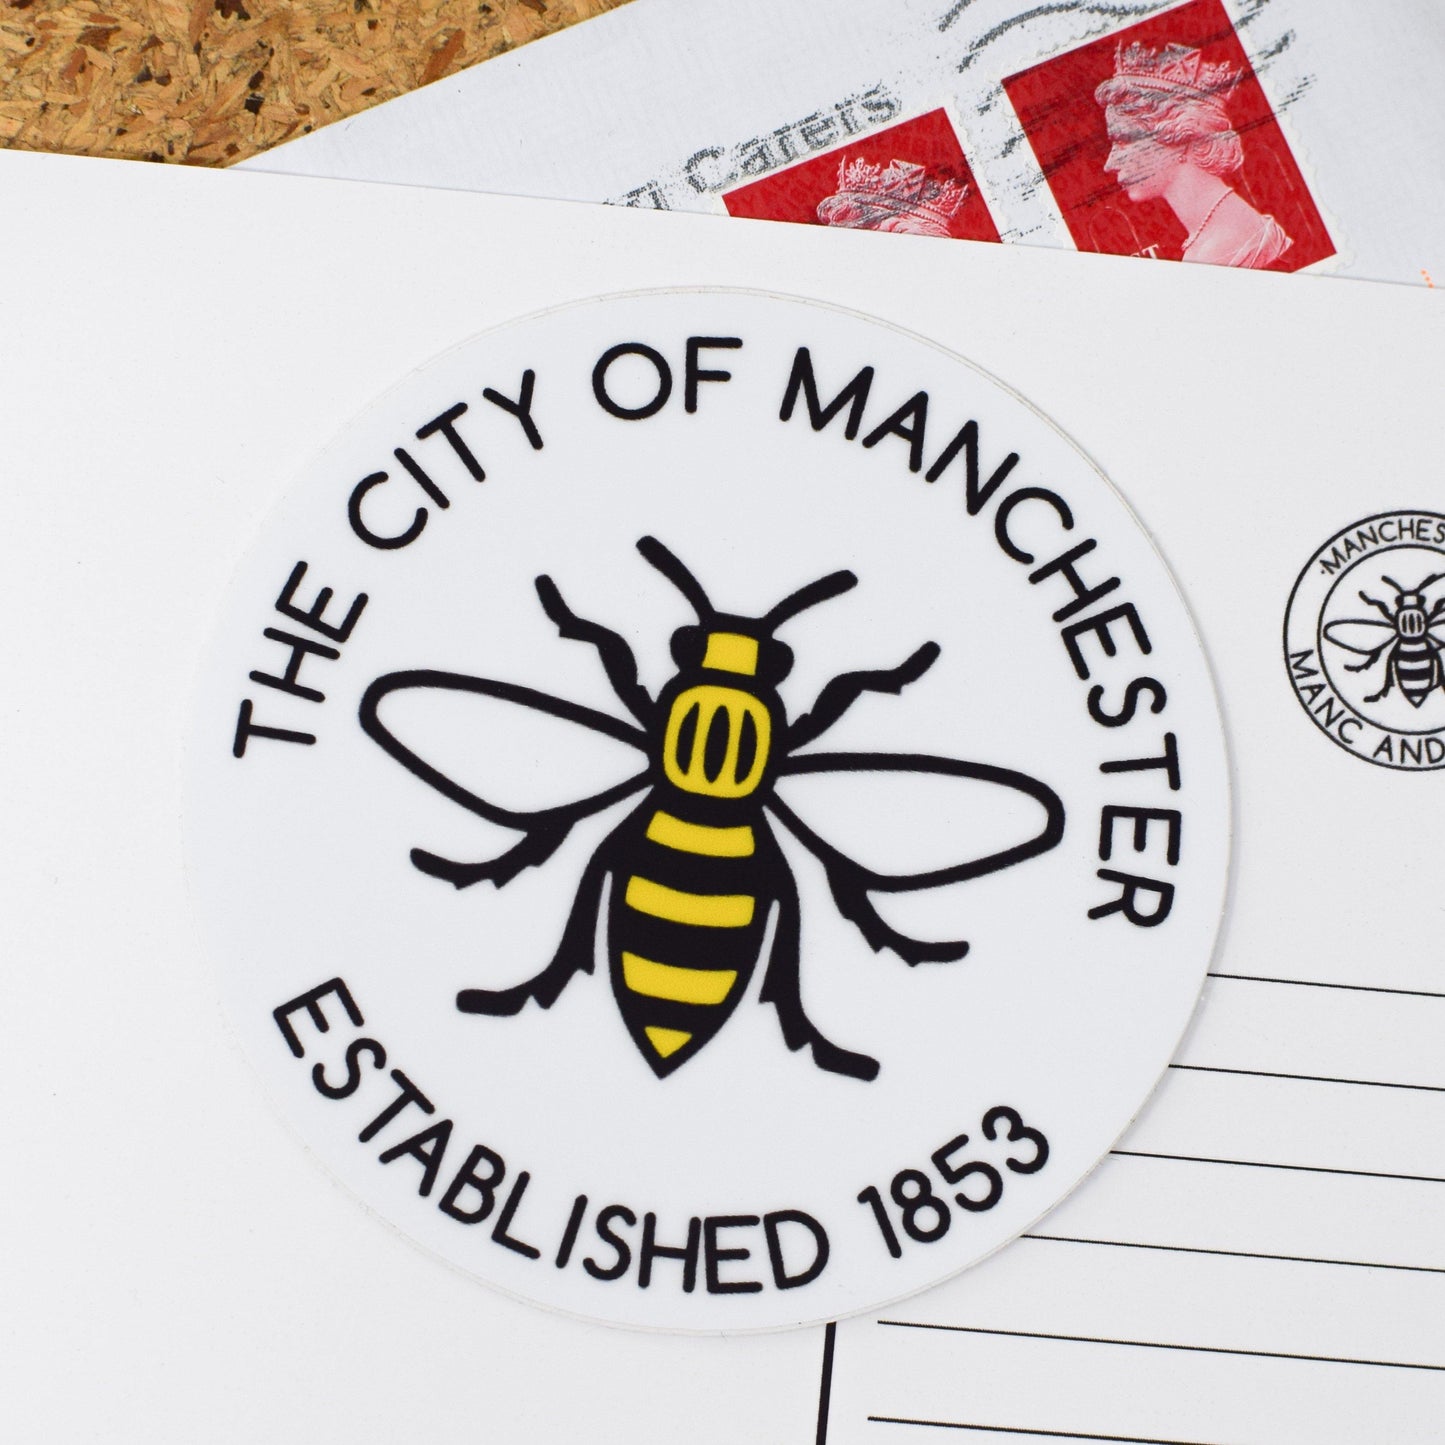 Manchester Established 1853 Sticker - The Manchester Shop